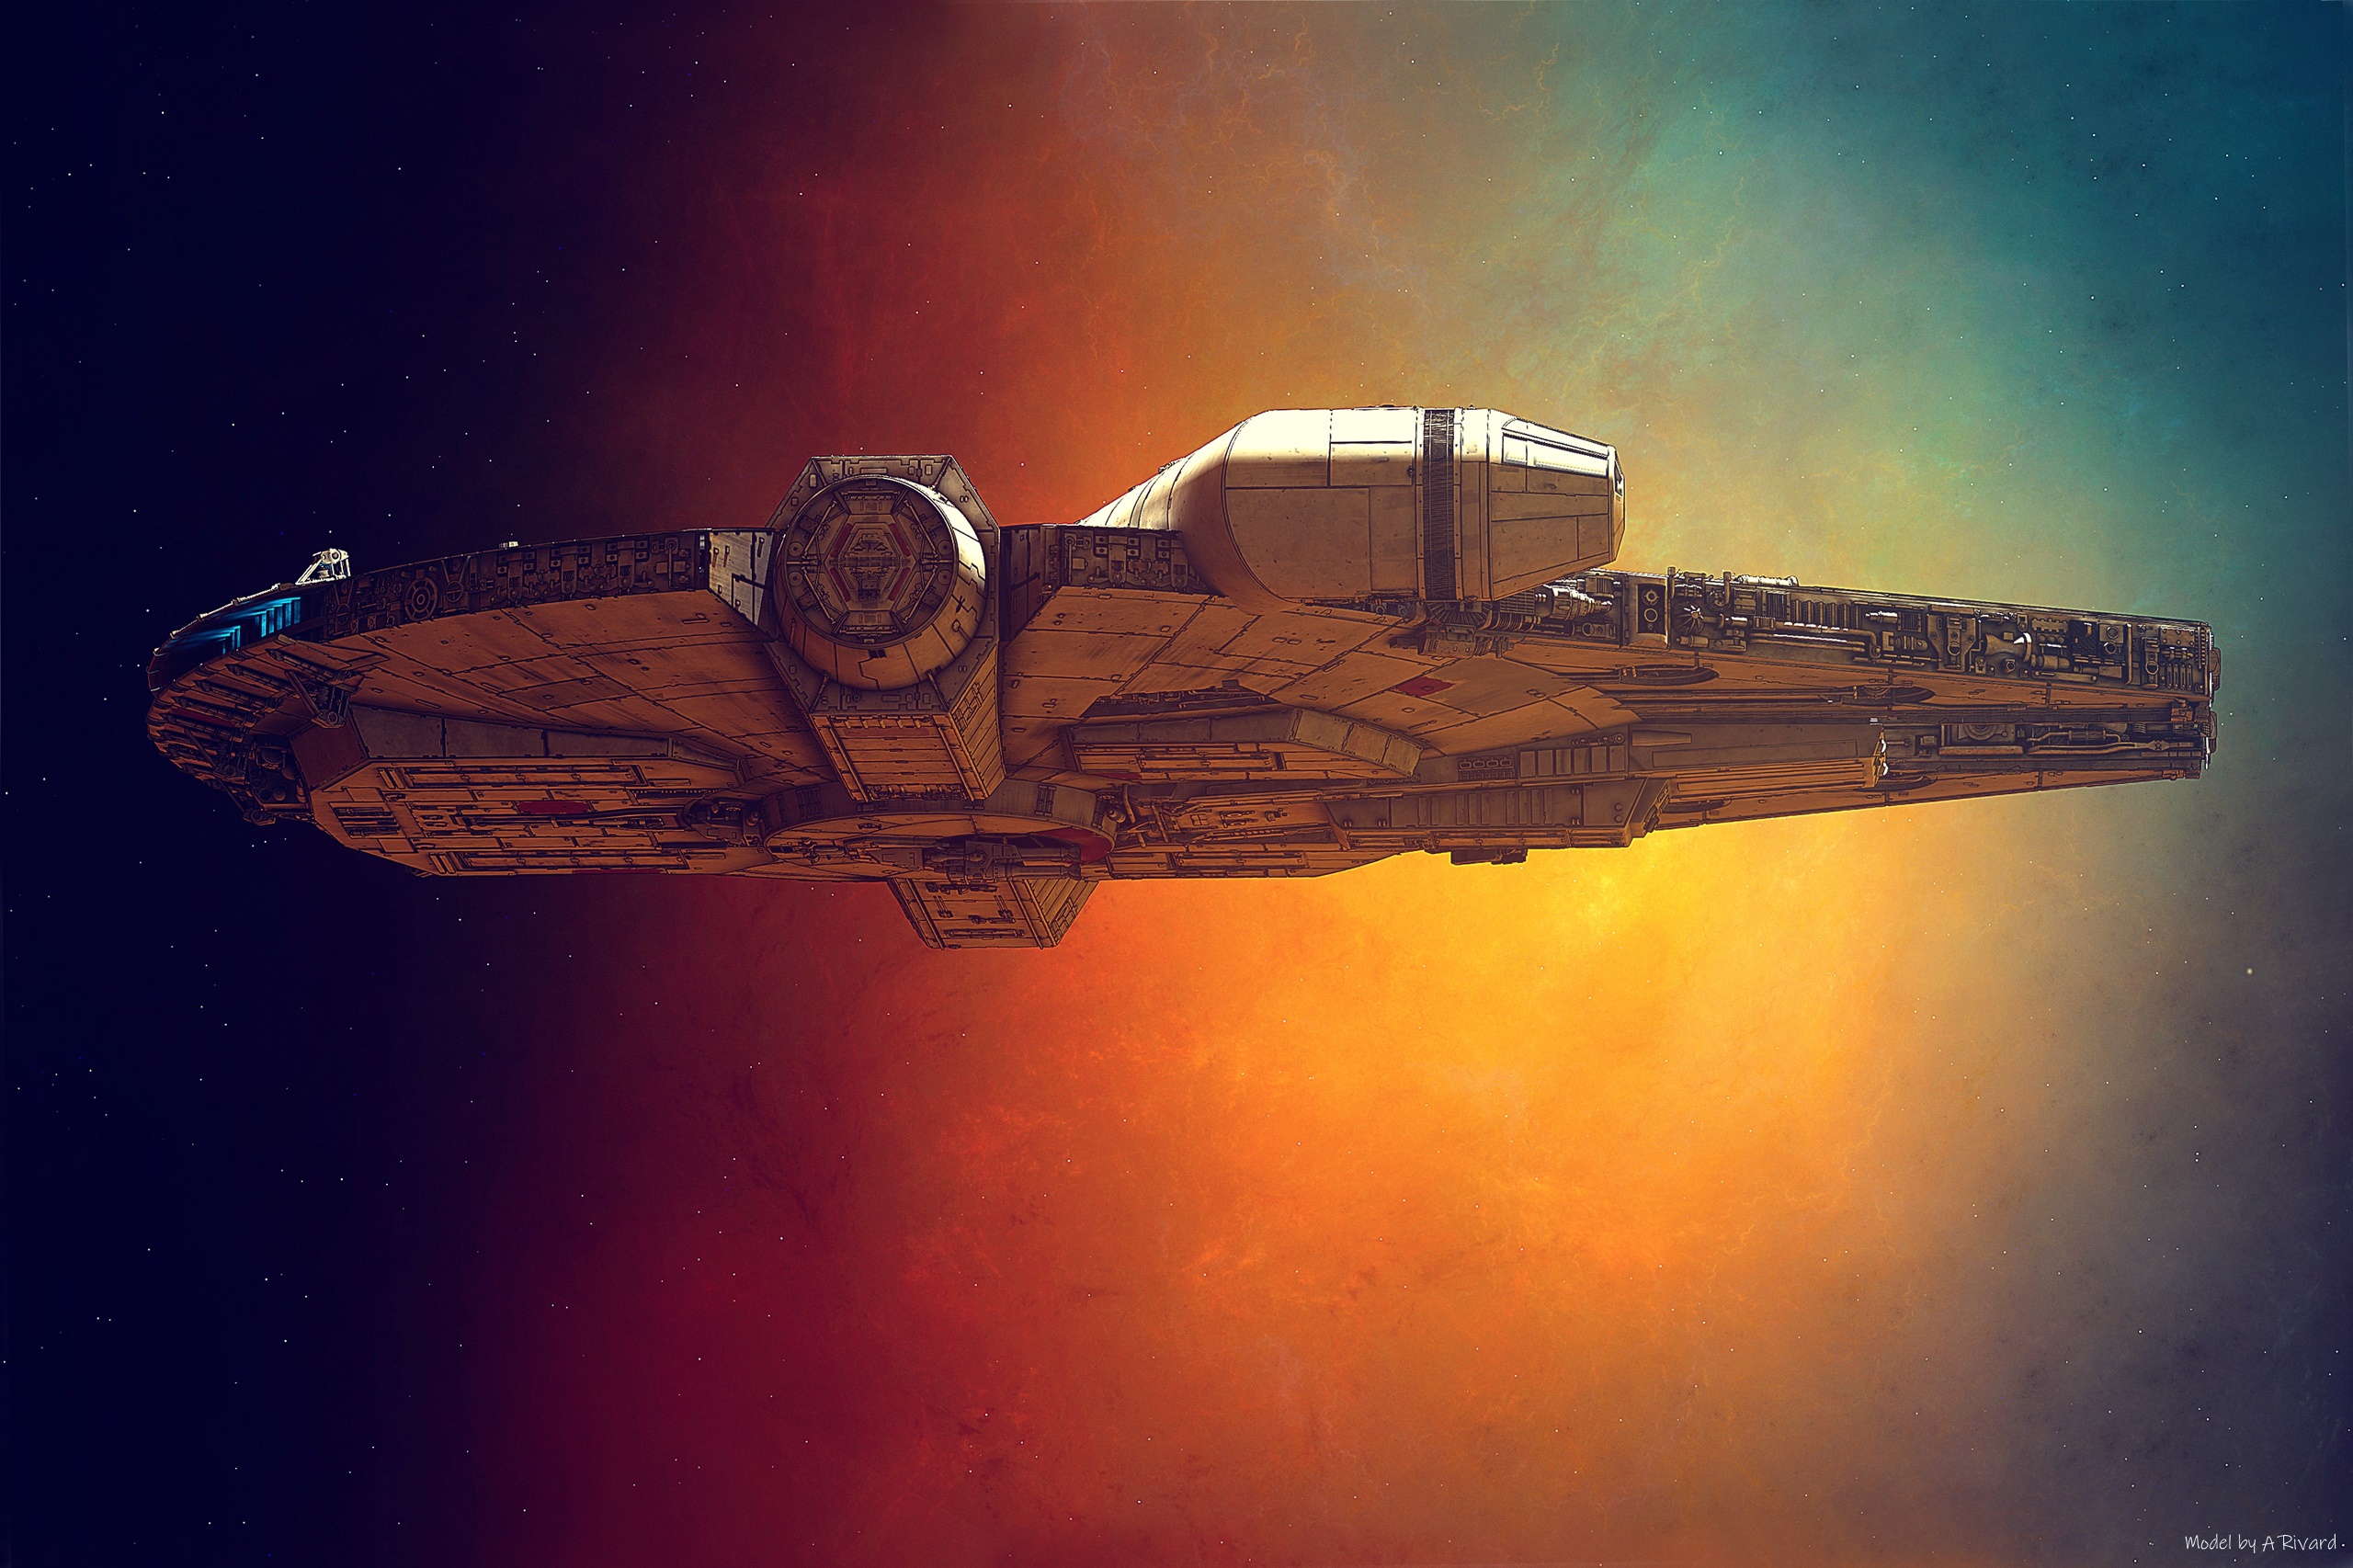 General 2560x1706 Star Wars spaceship artwork science fiction Millennium Falcon Star Wars Ships